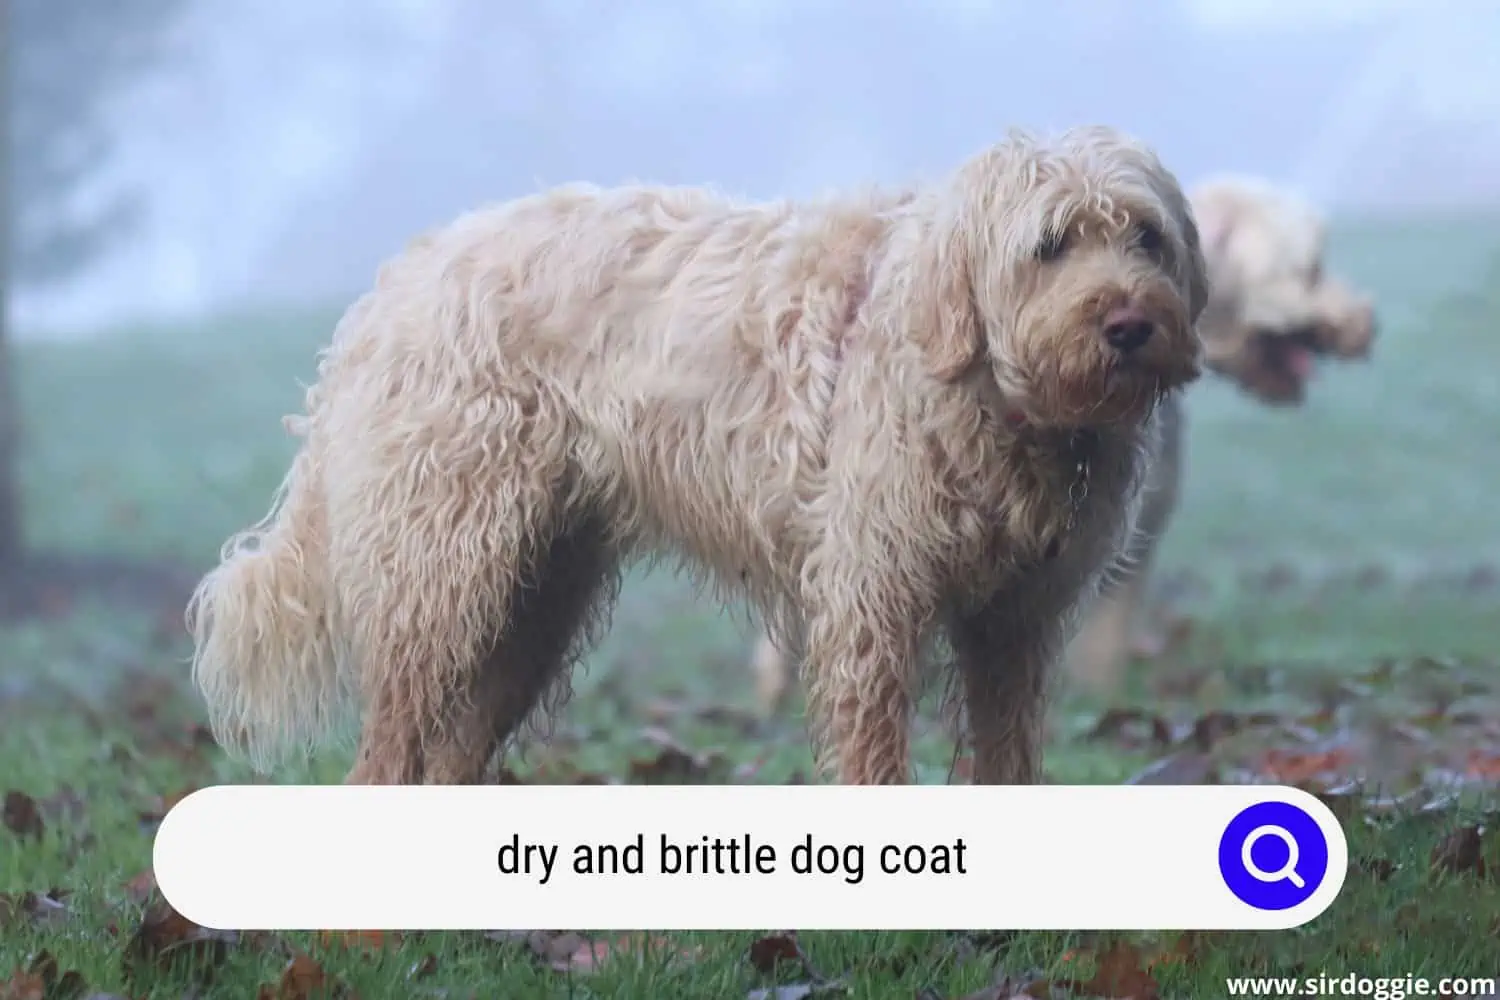 Brittle dogs coat